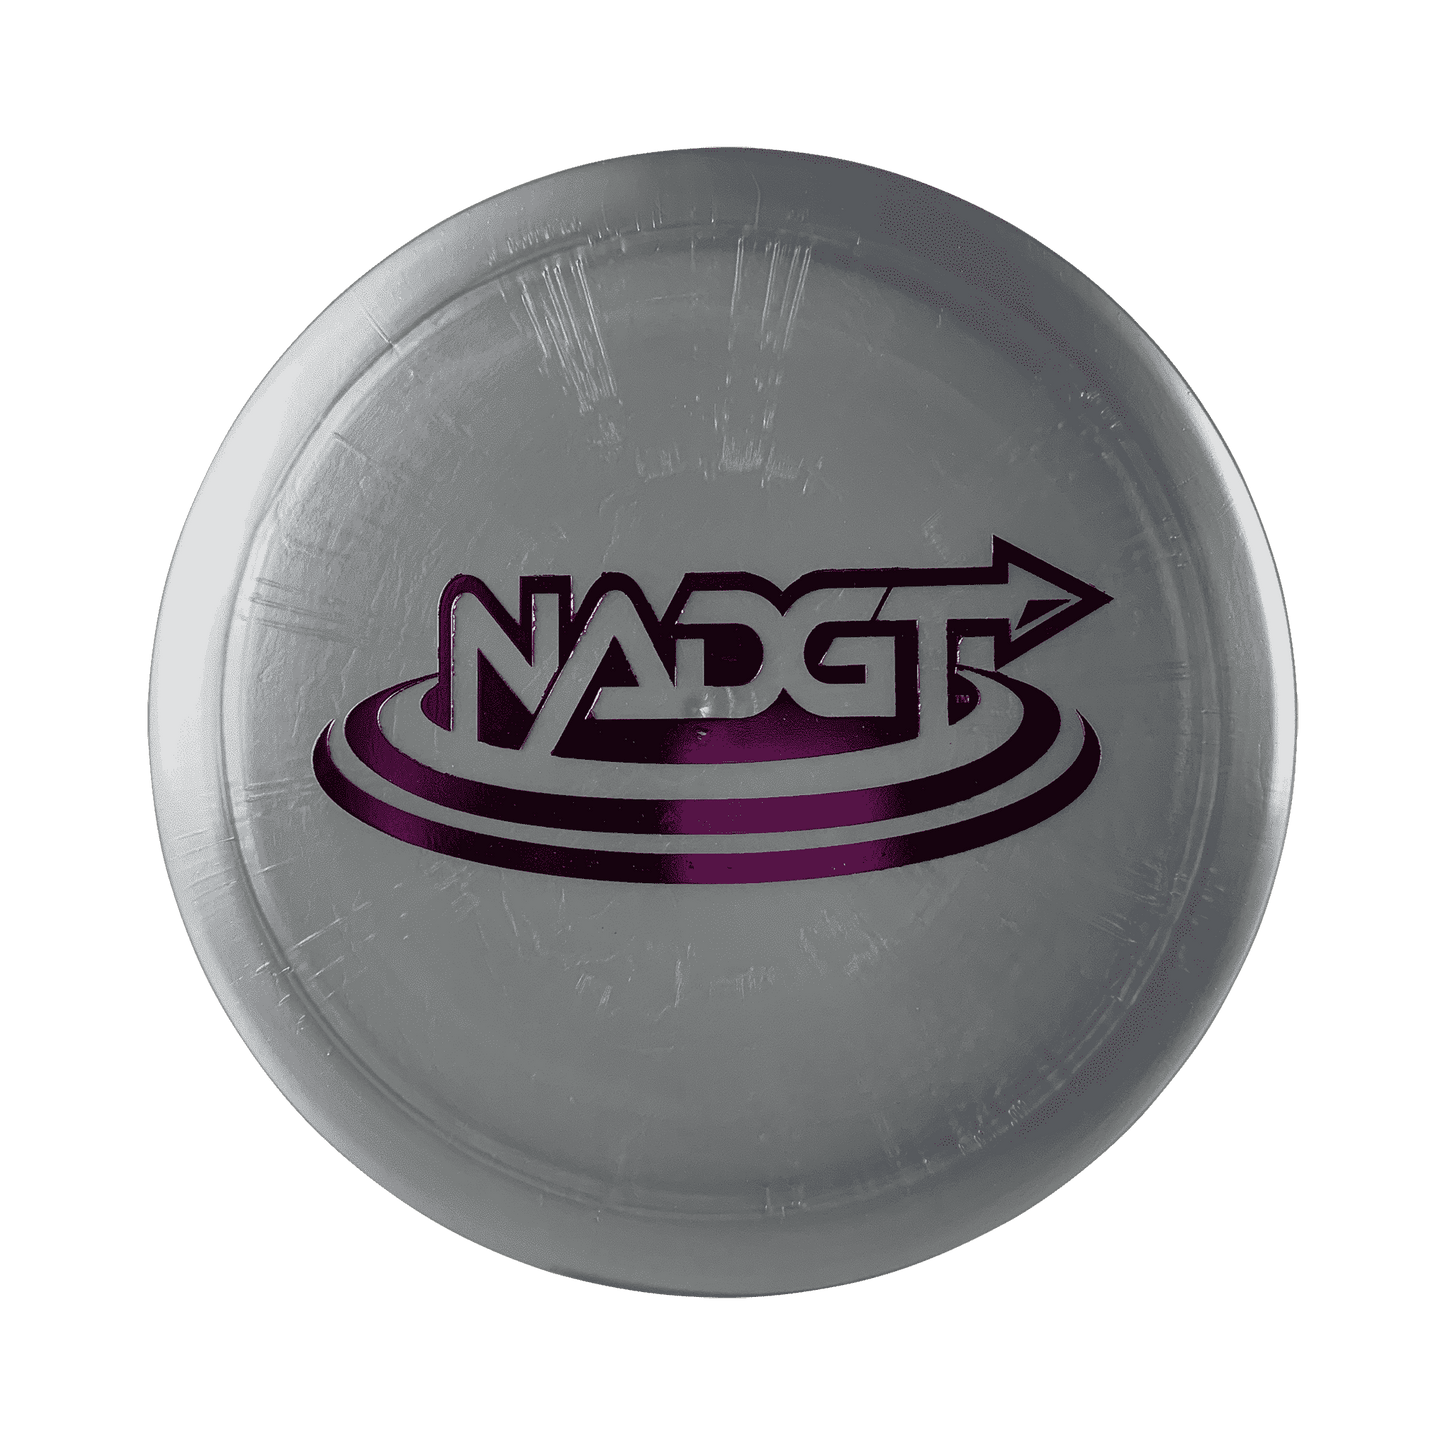 PL Rogue - NADGT Stamp Disc DGA silver 170 